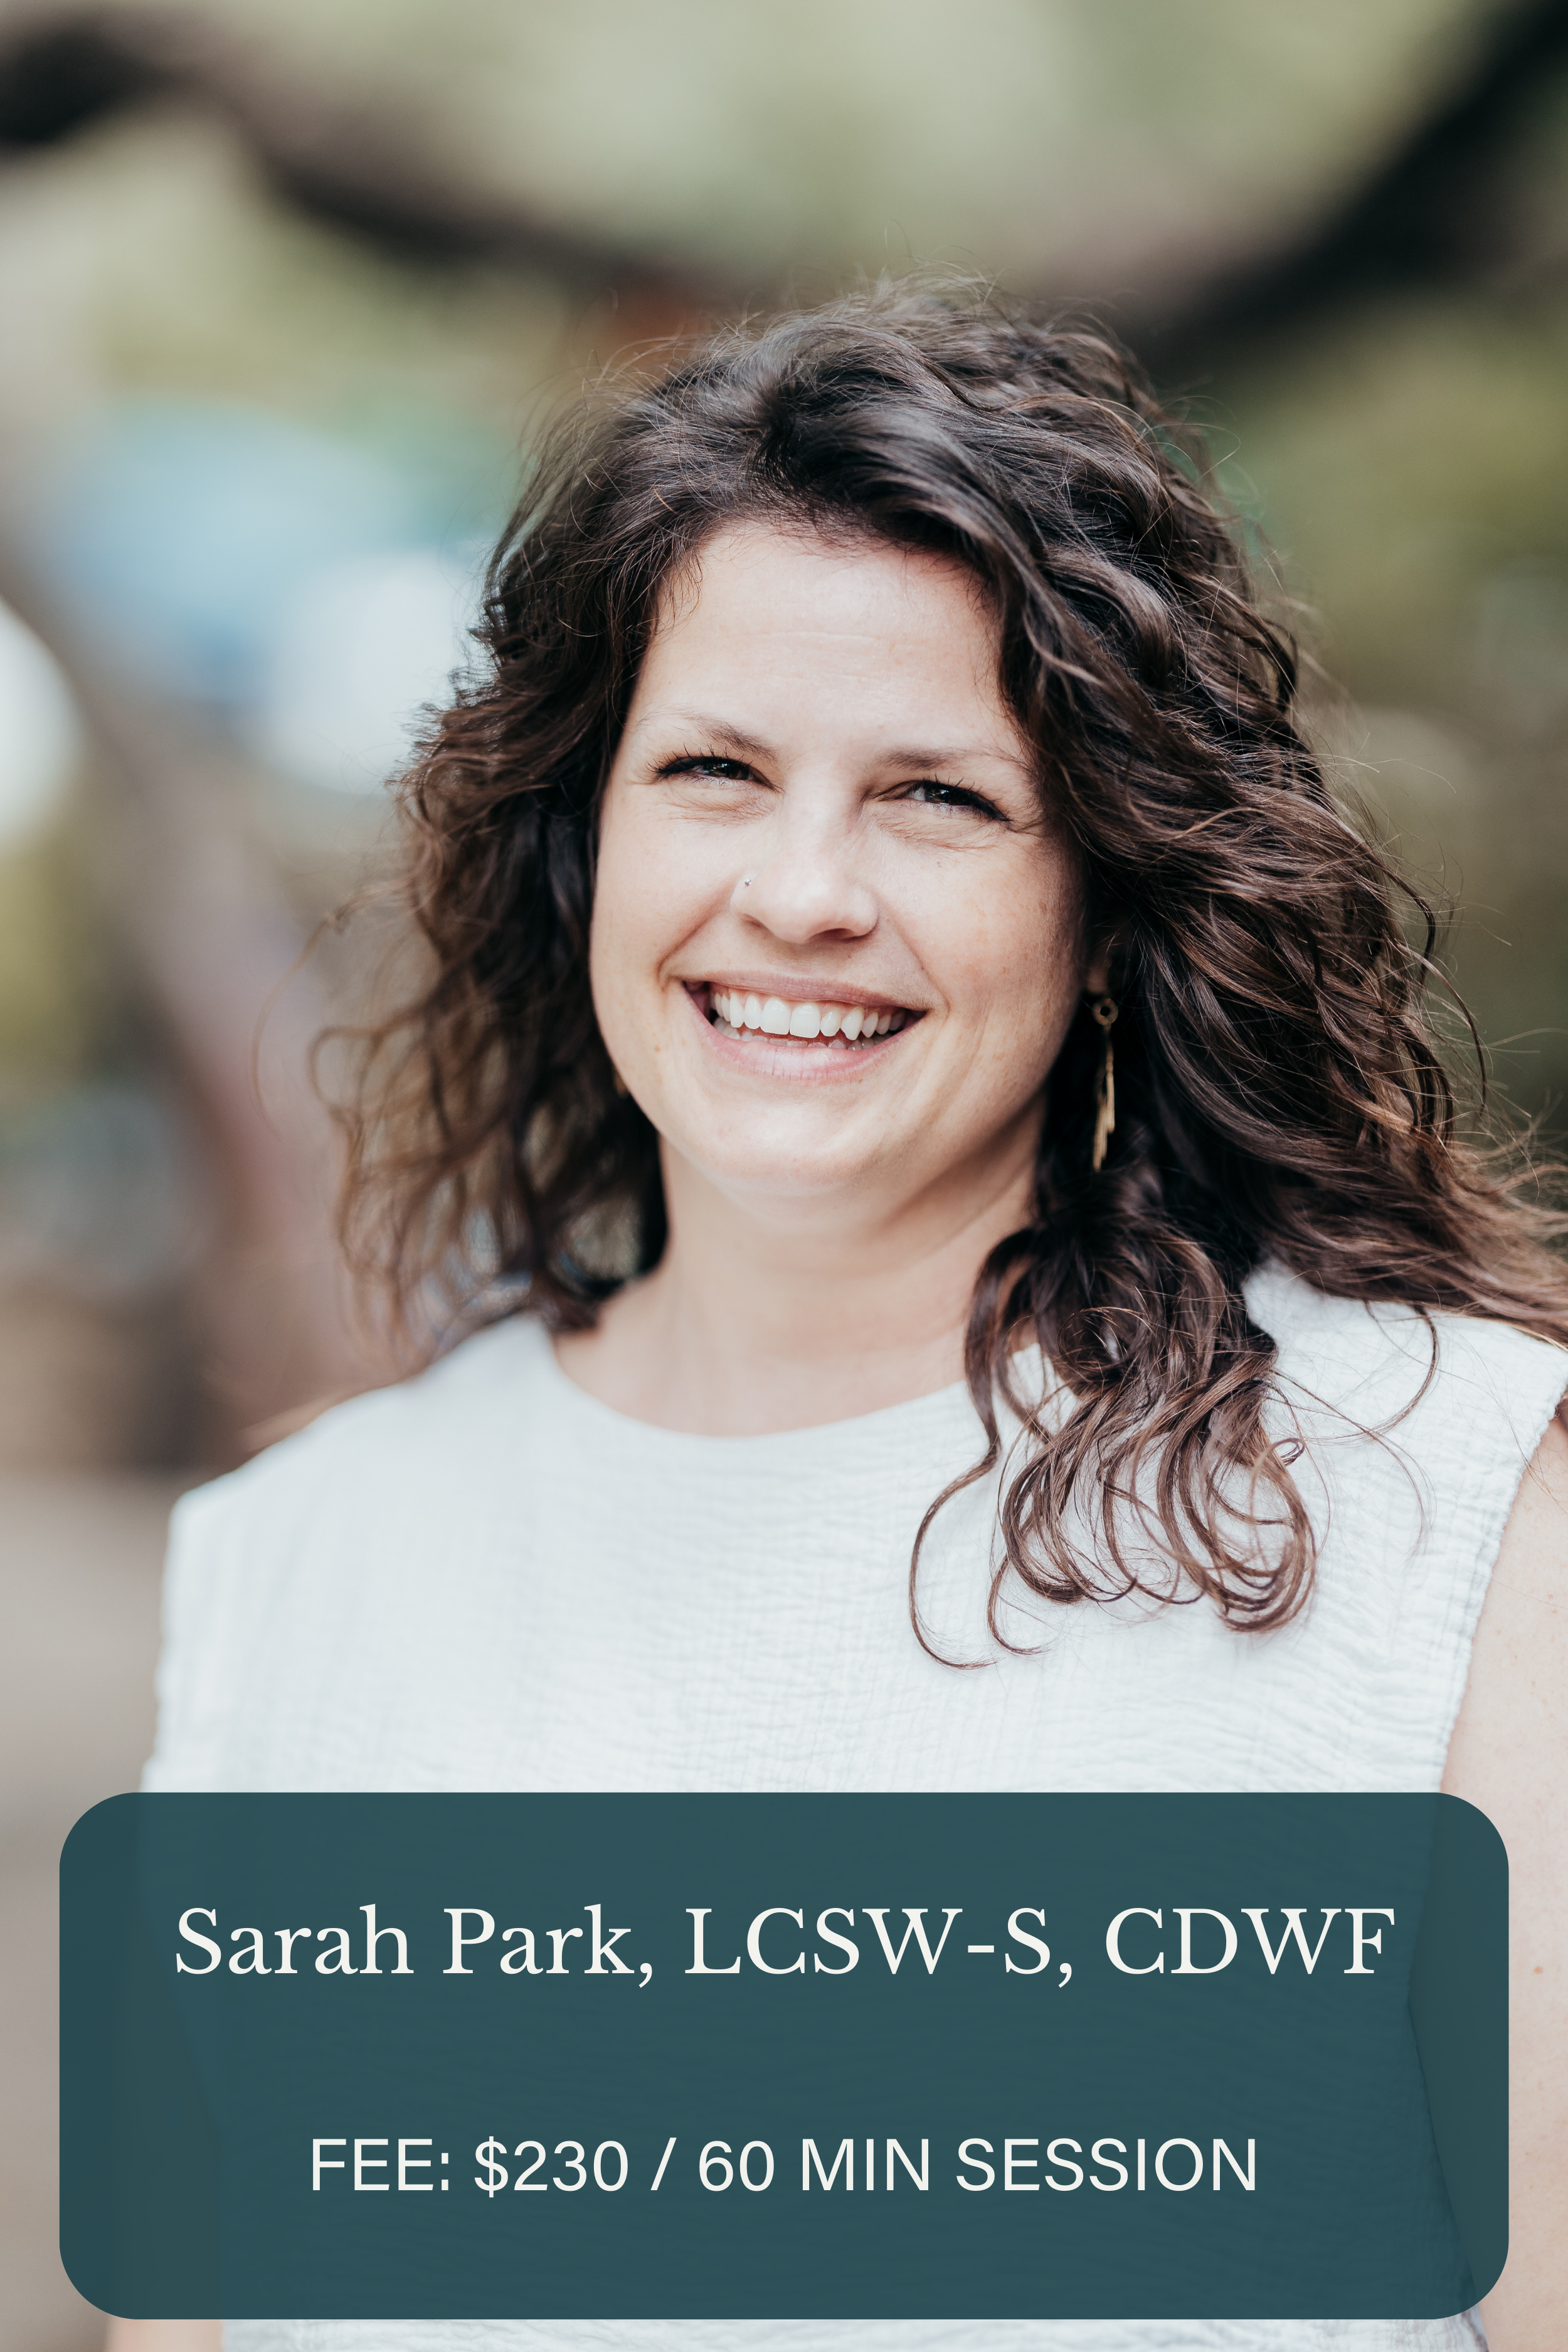 Sarah Park, LCSW-S, CDWF